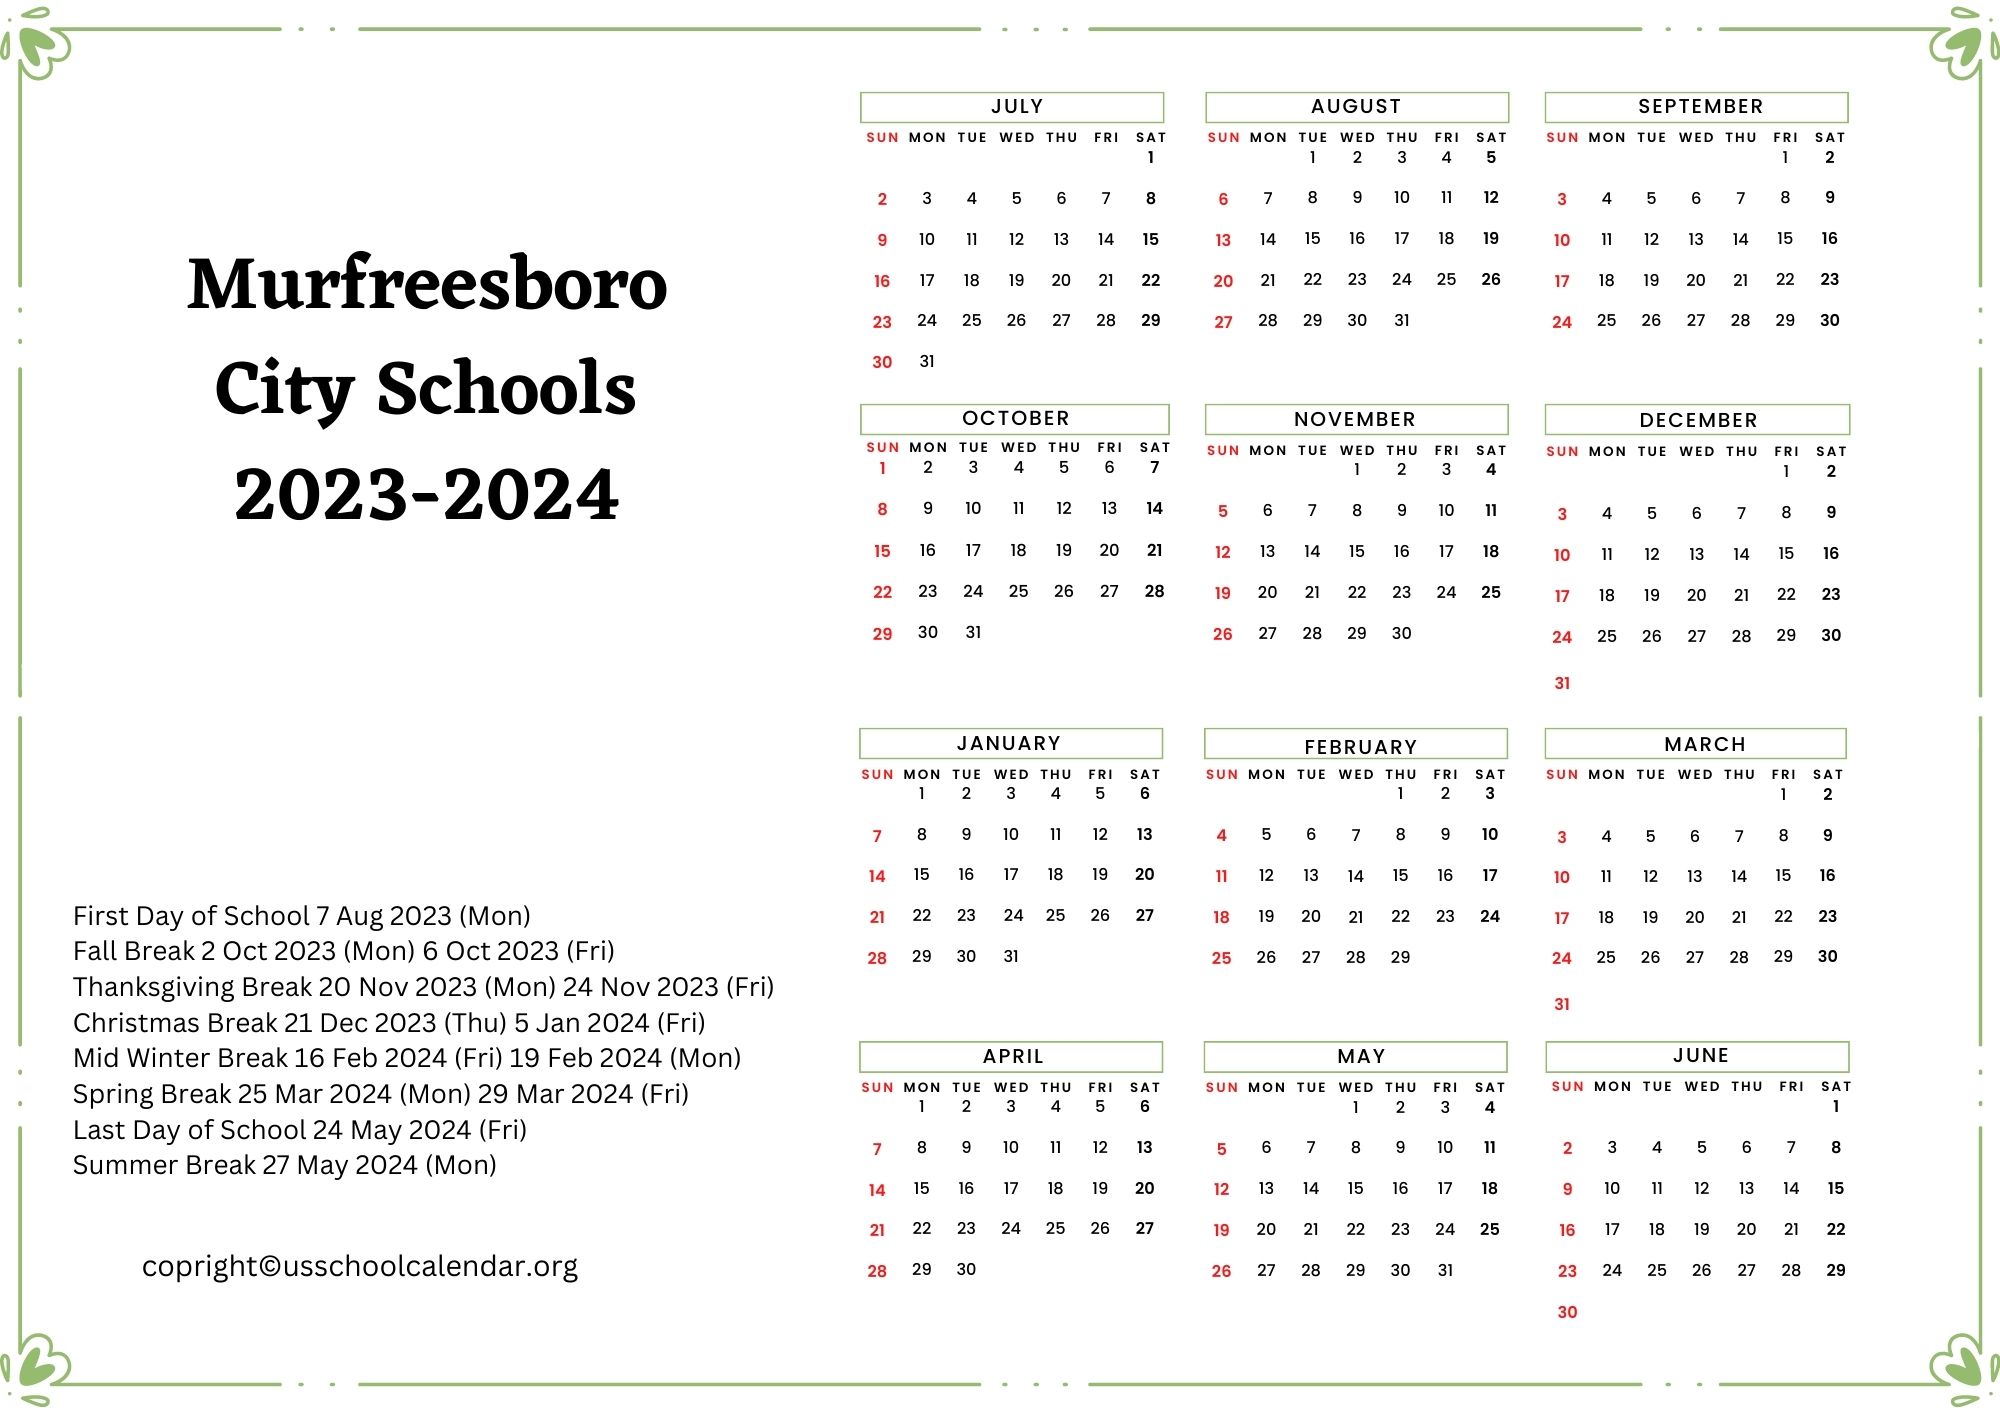 Murfreesboro City Schools Calendar with Holidays 2023 2024